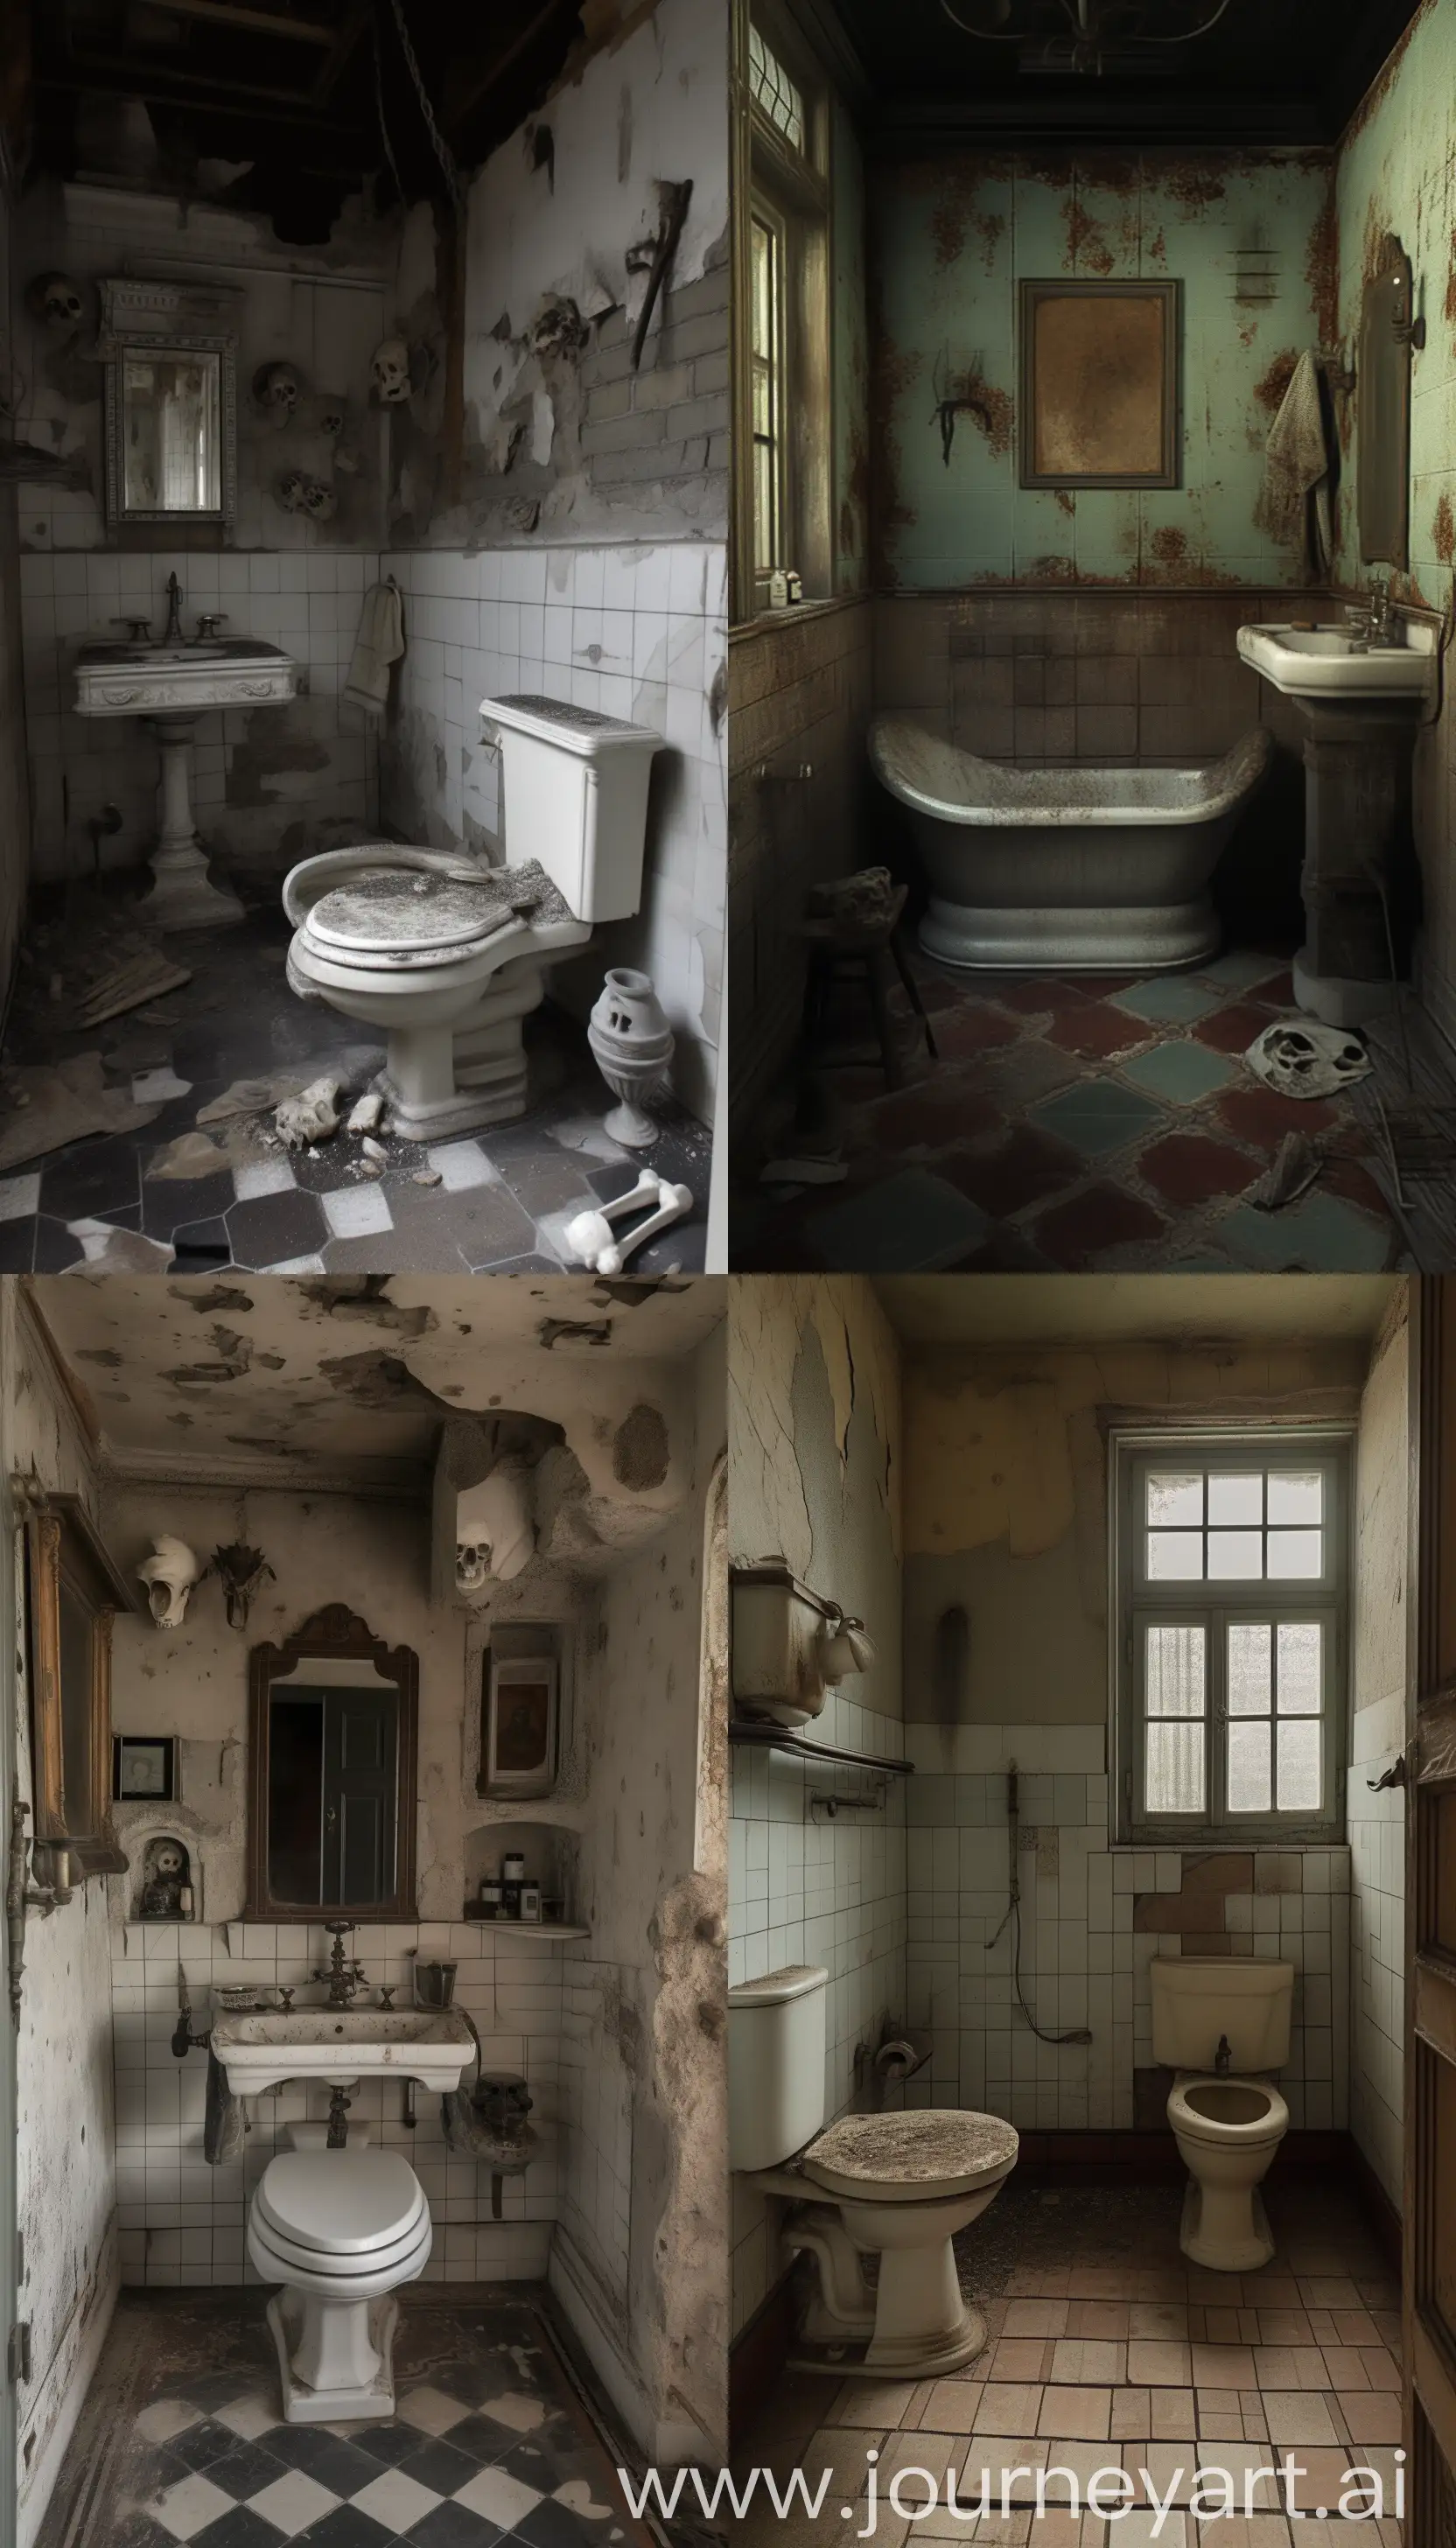 Eerie-Bathroom-Scene-Dark-Atmosphere-with-Distinctive-Style